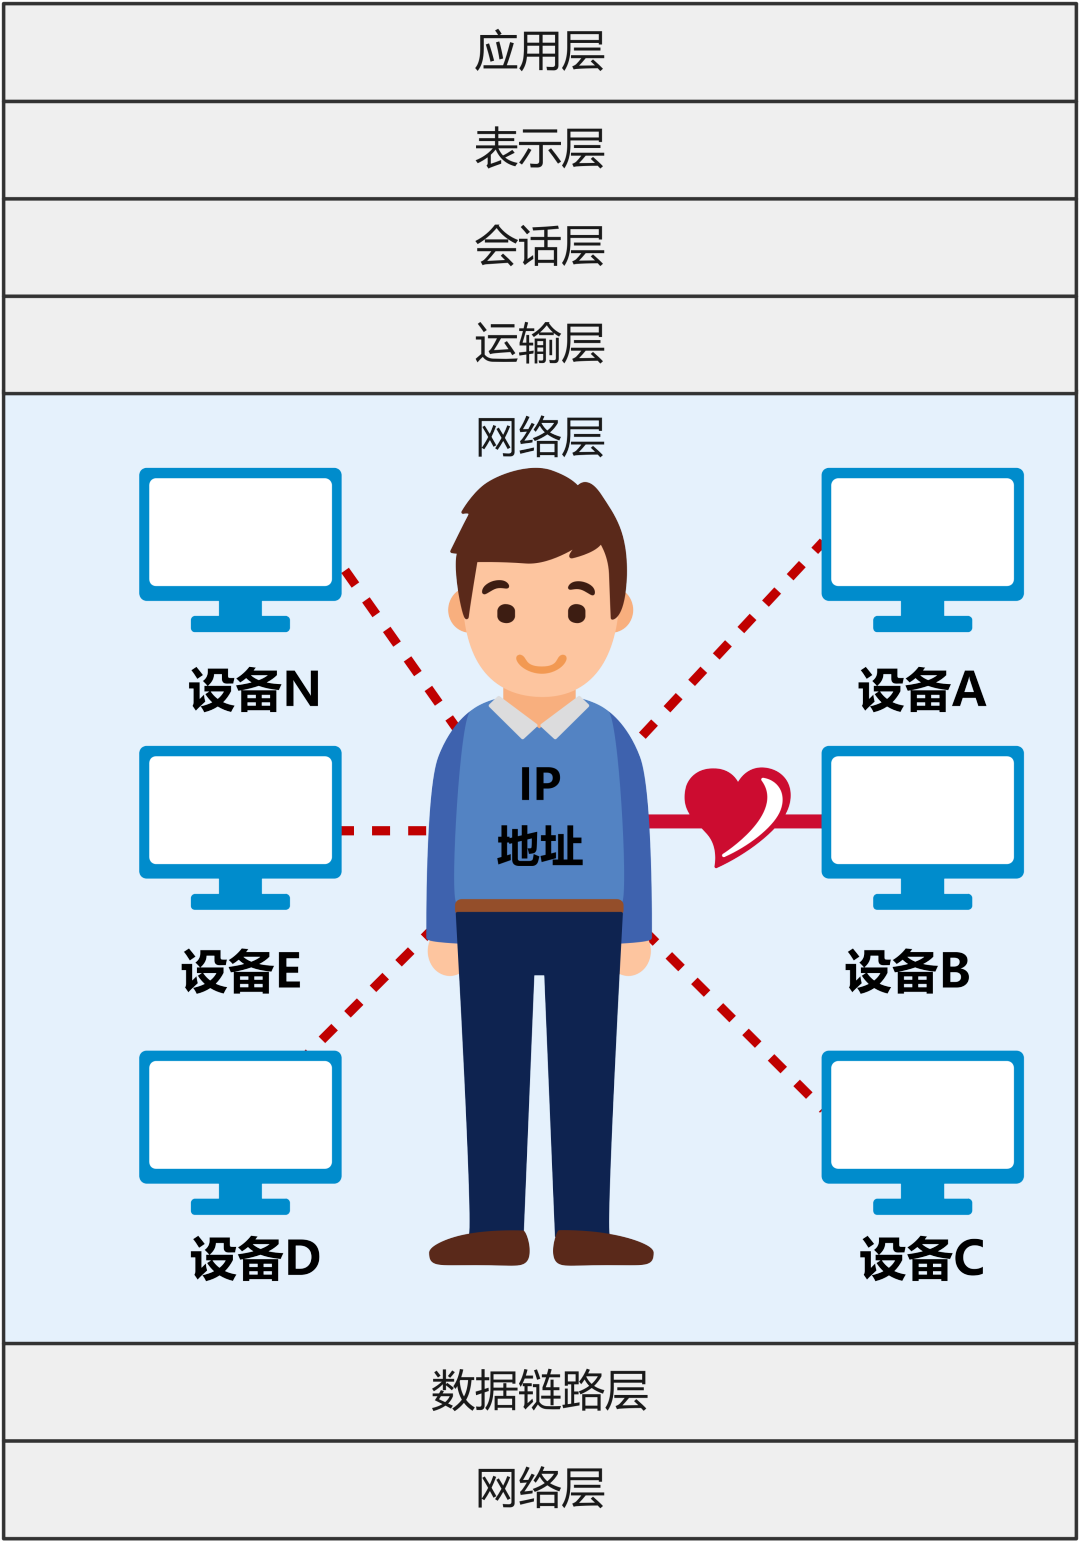 IP协议